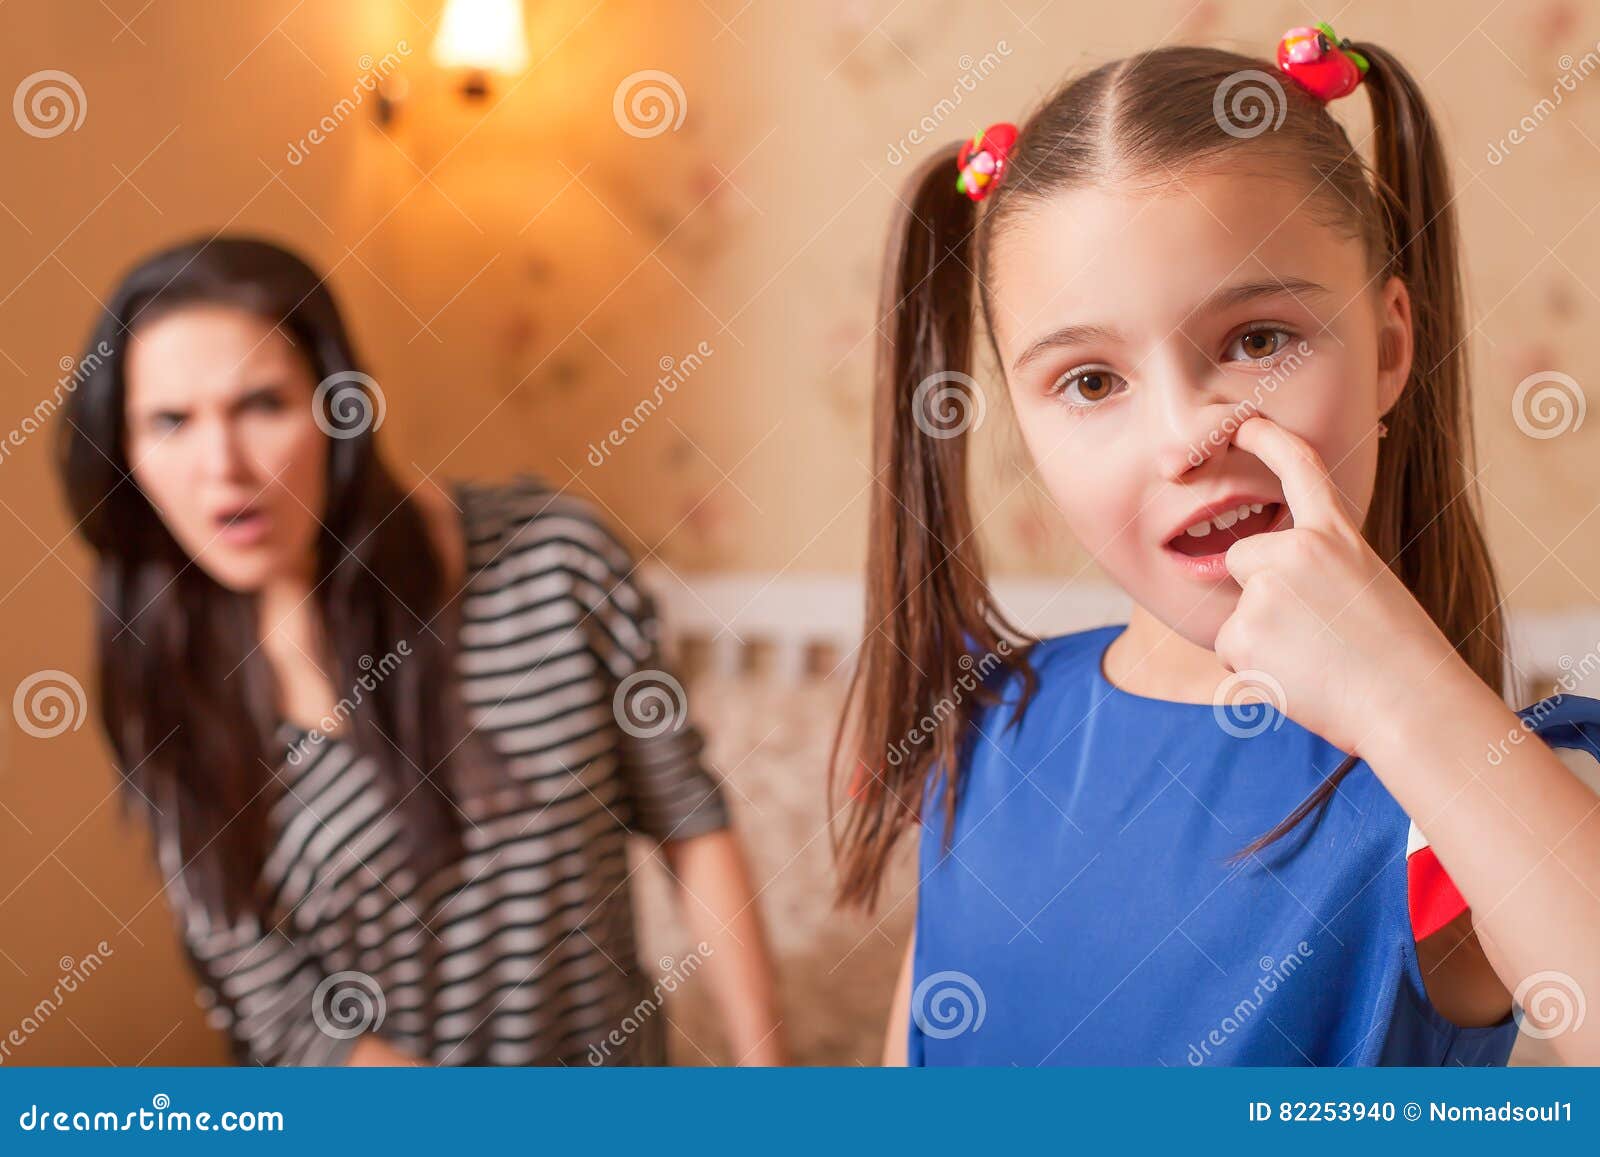 curious girl picking a nose